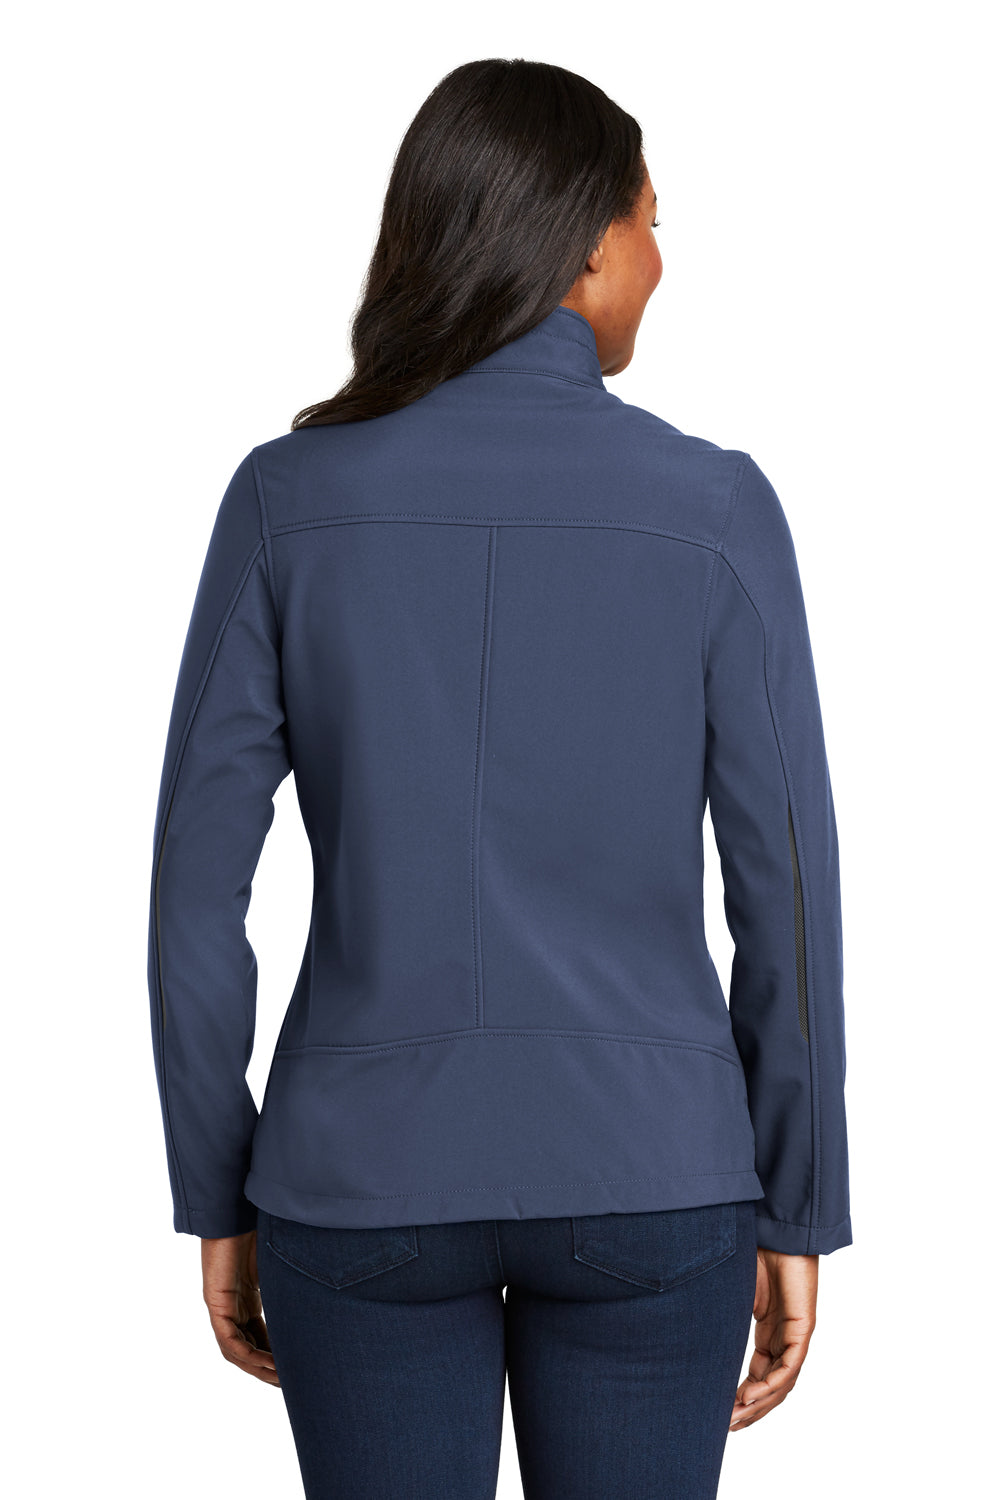 Port Authority L324 Womens Welded Wind & Water Resistant Full Zip Jacket Navy Blue Back